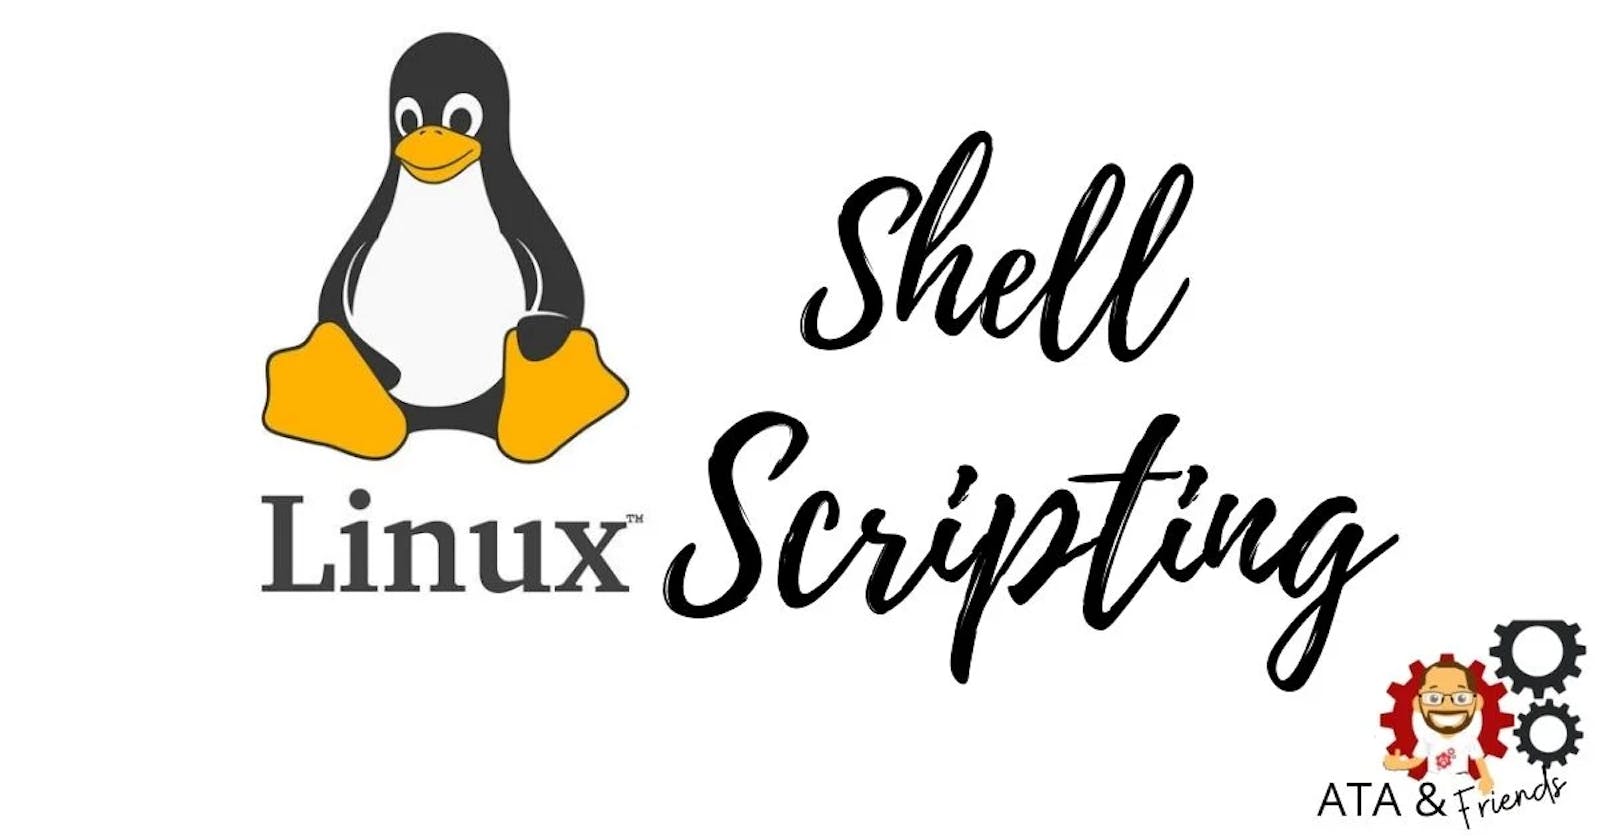 #day4 - Basic Linux Shell Scripting for DevOps Engineers.